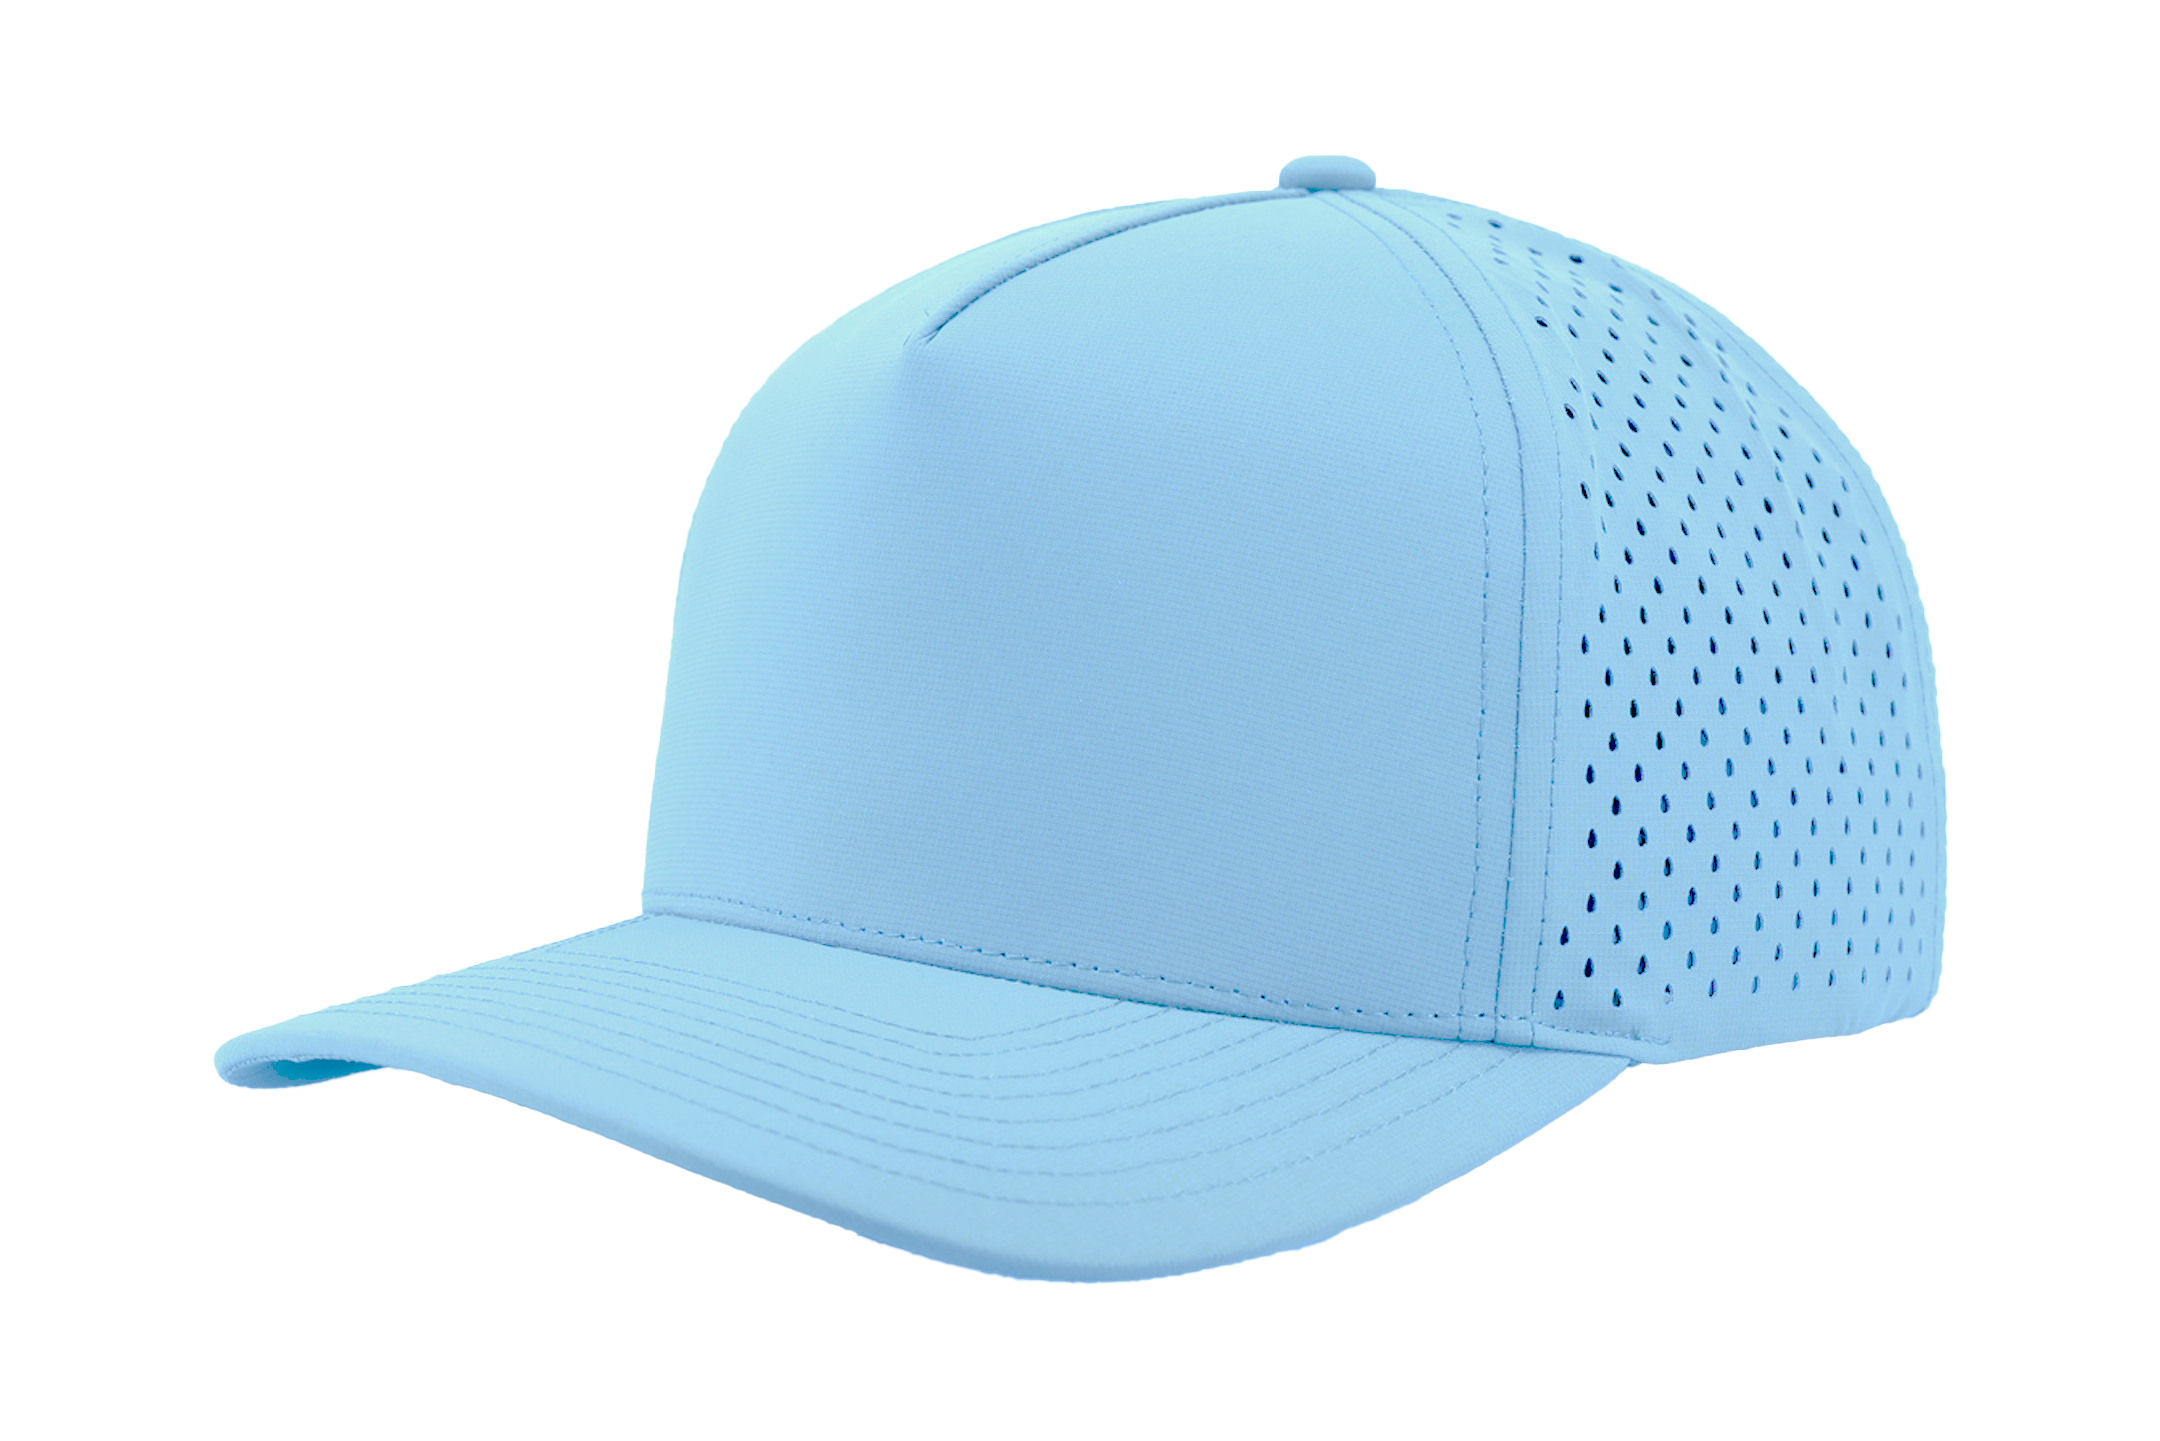 colombia blue Custom Hat blackhawk front side view performance snapback